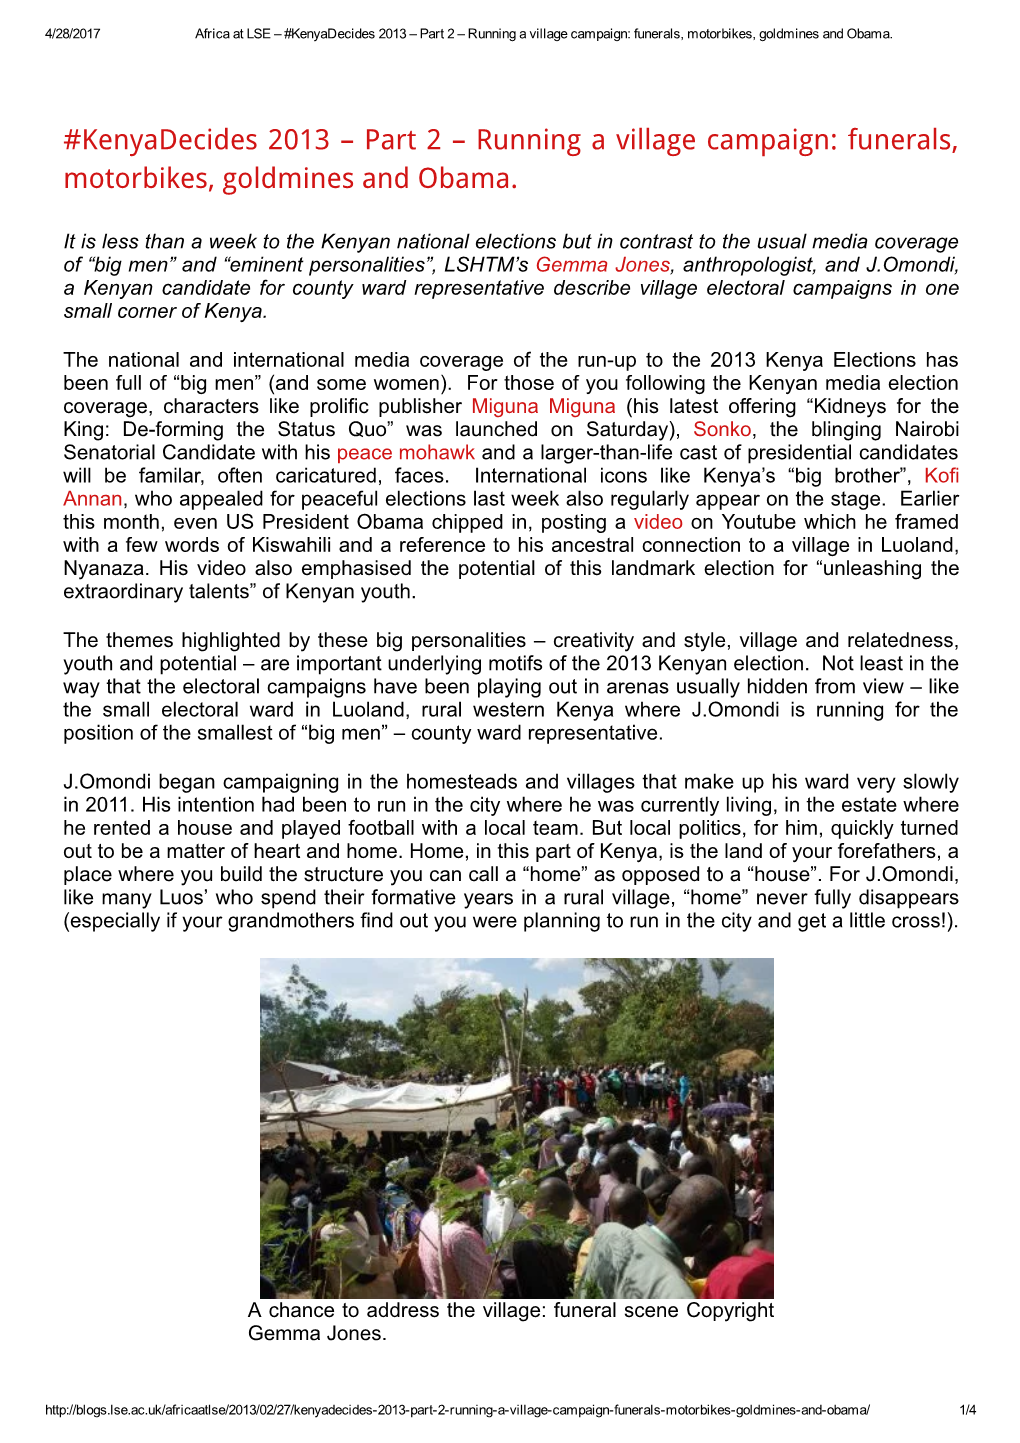 Kenyadecides 2013 – Part 2 – Running a Village Campaign: Funerals, Motorbikes, Goldmines and Obama